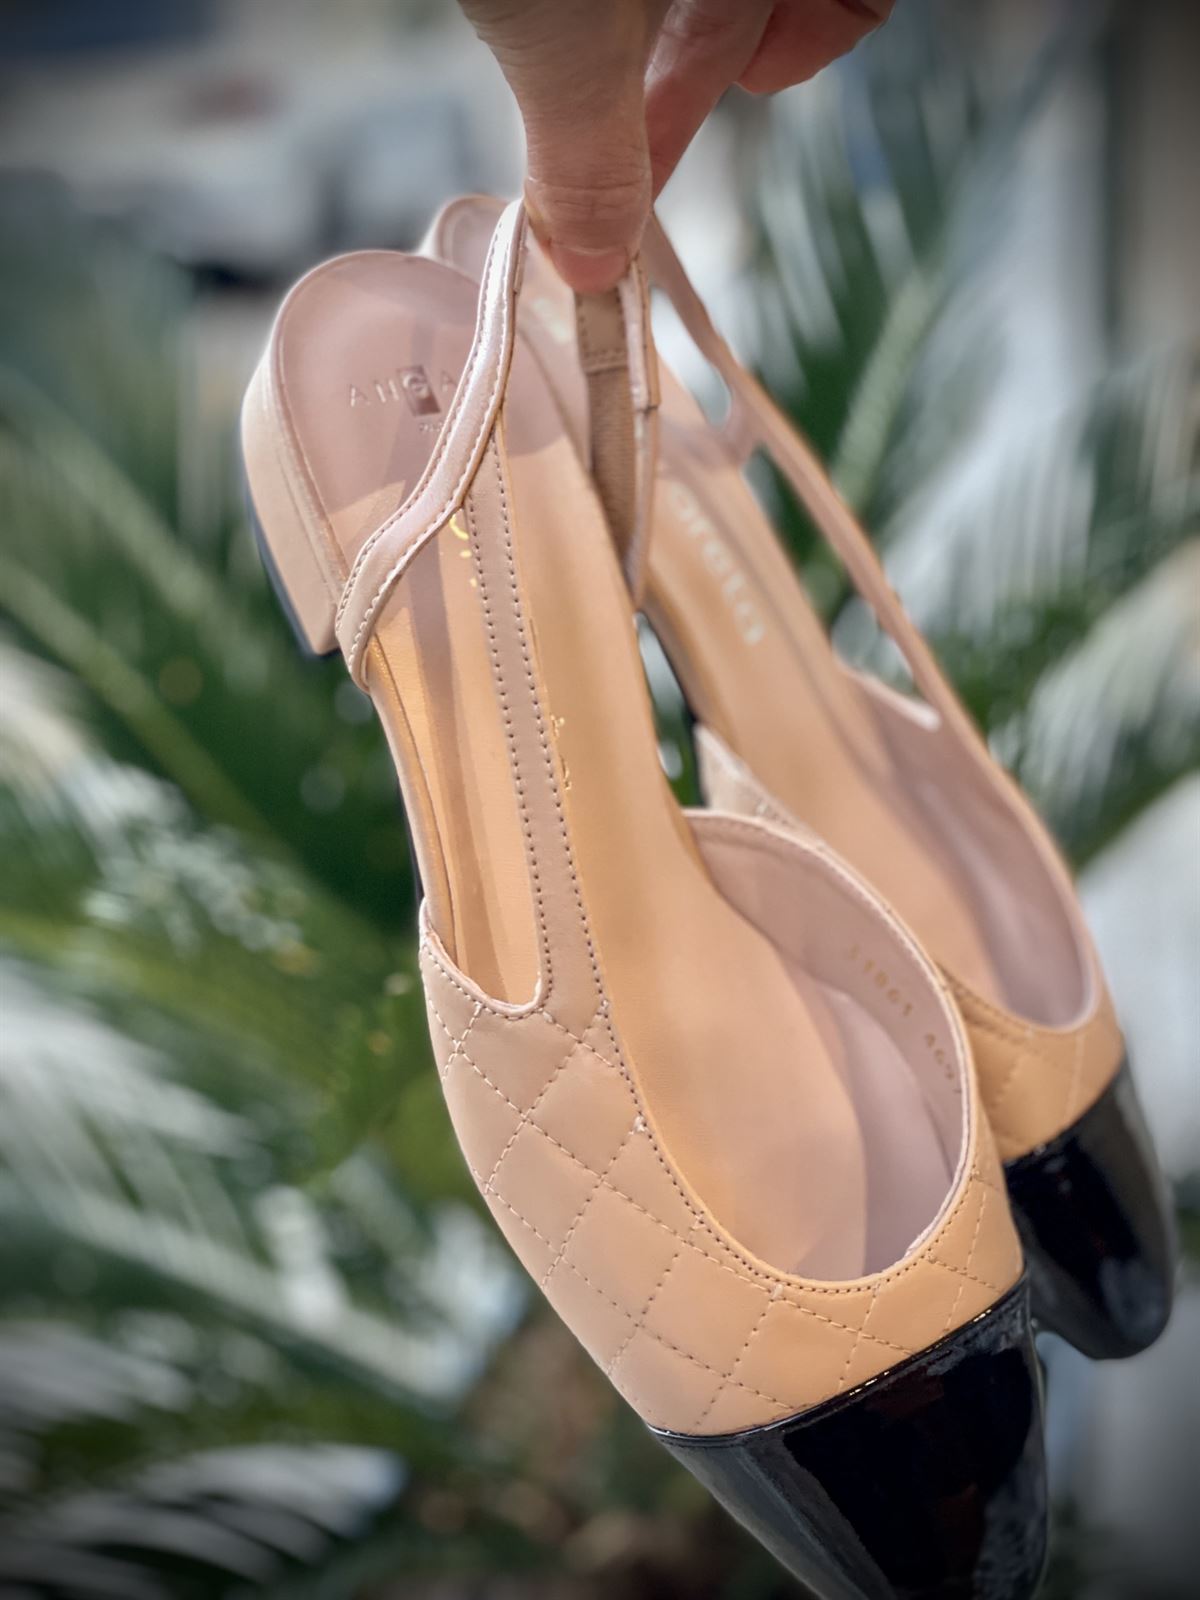 Zapatos Angari bailarinas puntera charol bicolor - Imagen 5